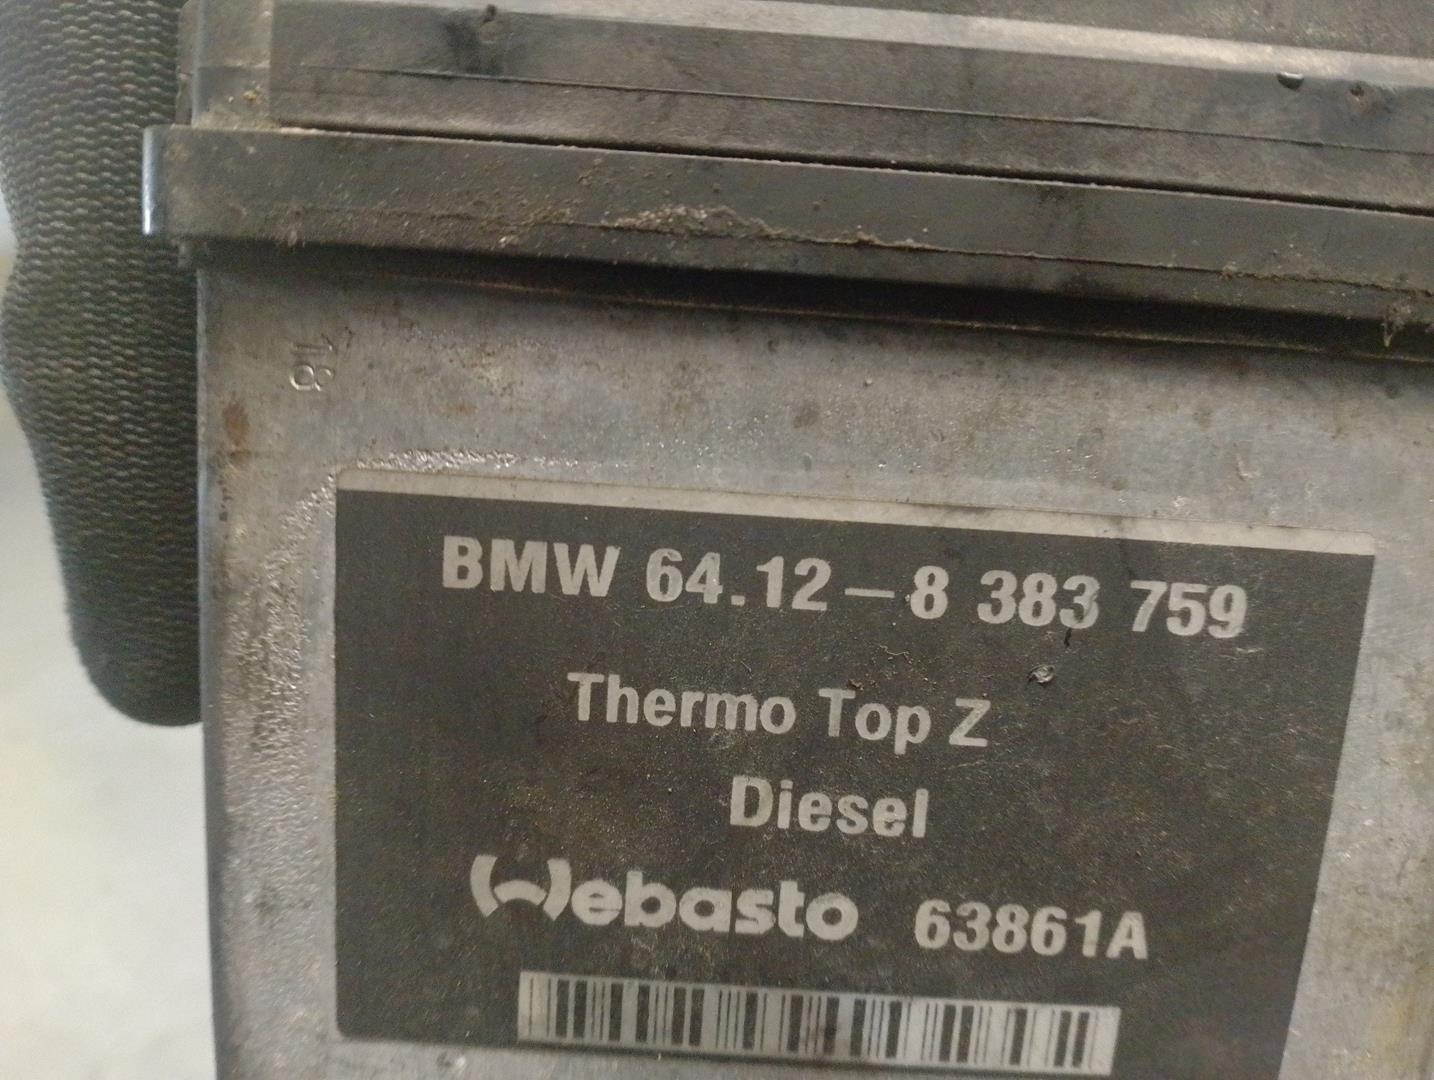 BMW 3 Series E46 (1997-2006) Другие блоки управления 64128383759, 63861A, WEBASTO 19921804